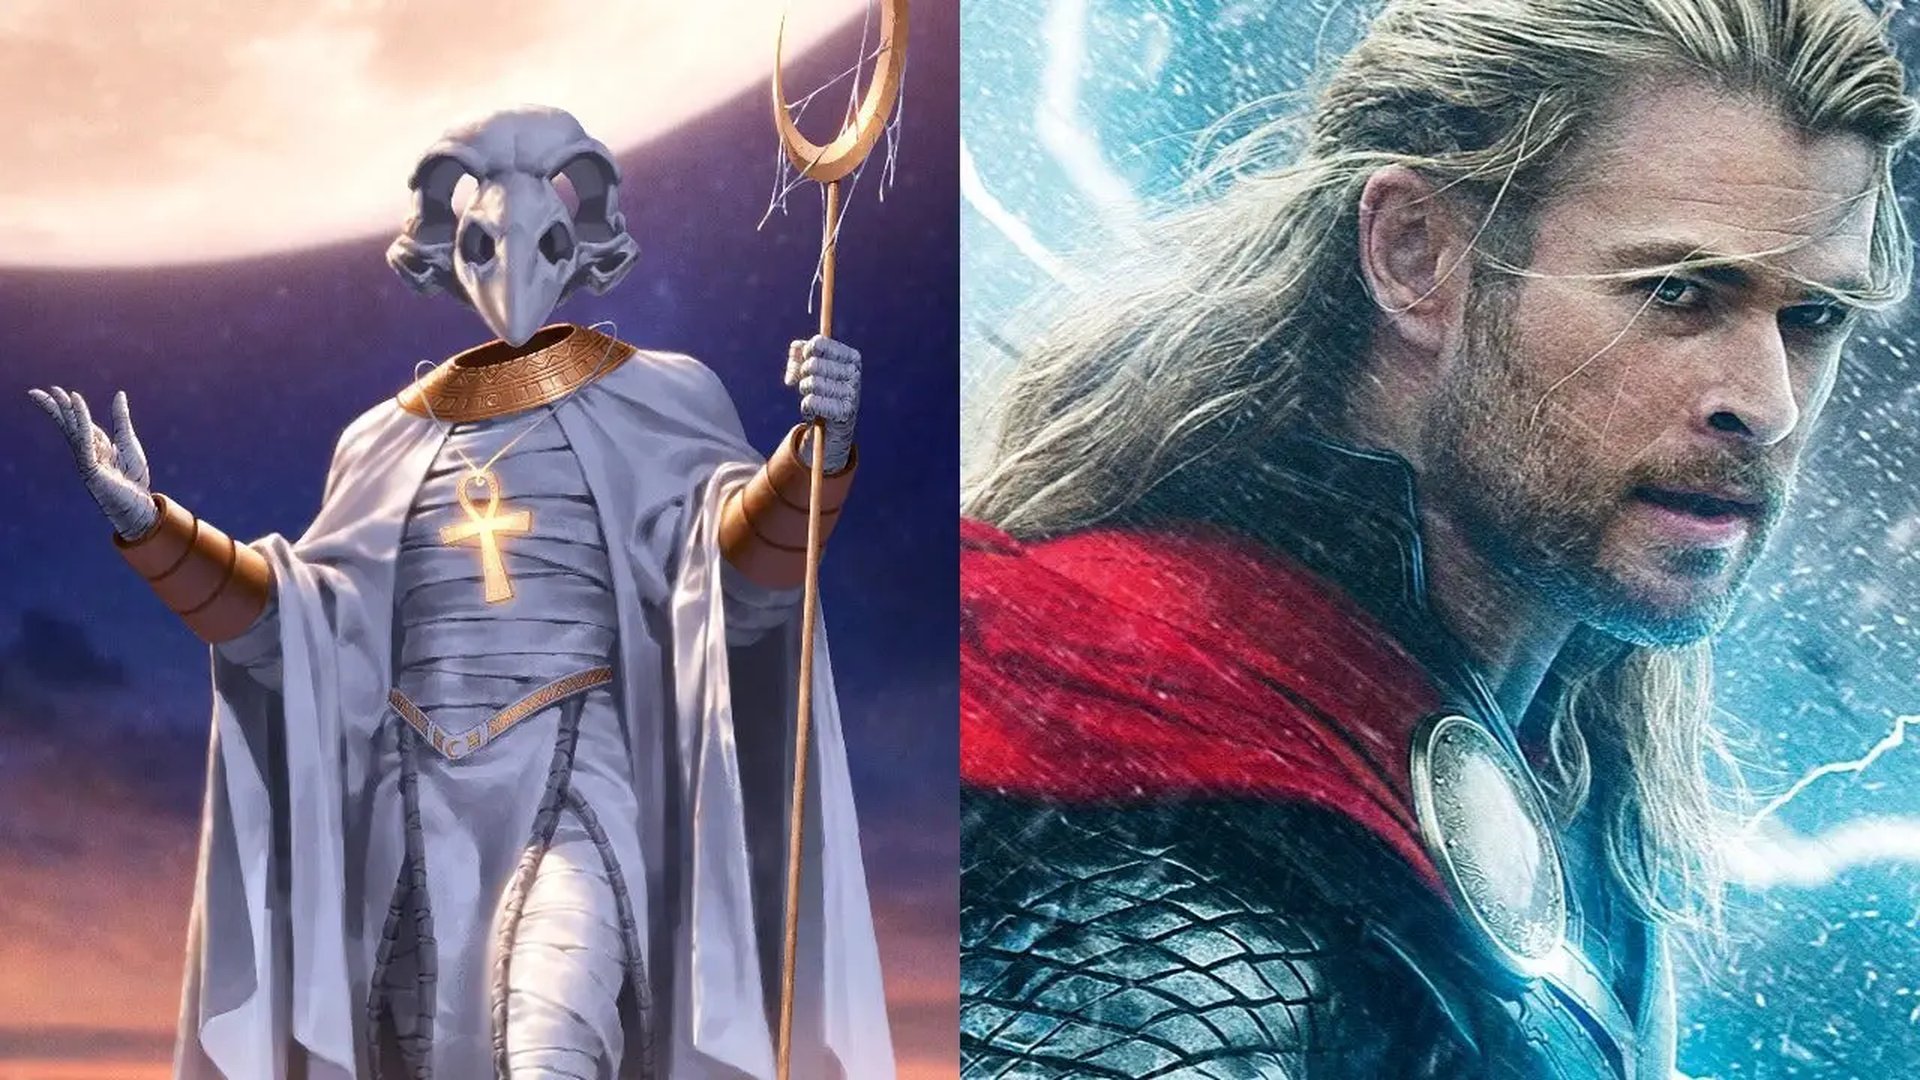 Gorr the God Butcher Explained - Who Is Christian Bale's Thor Villain? - IGN